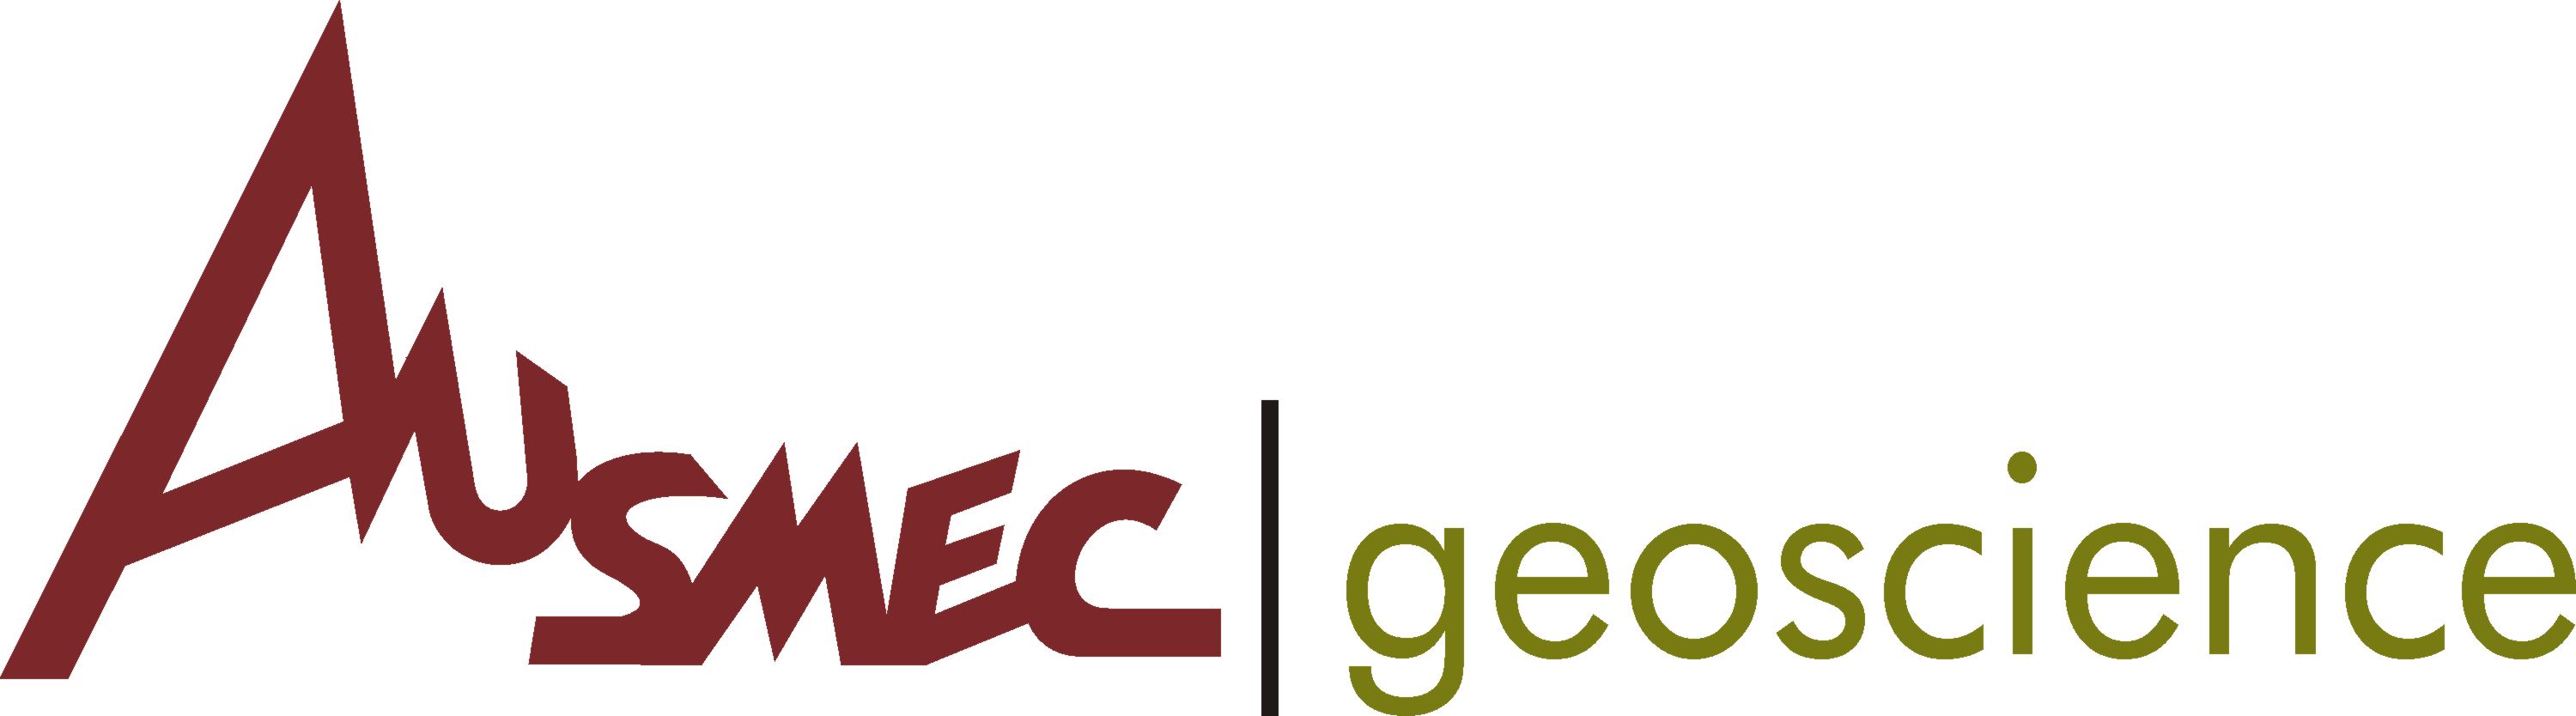 AUSMEC_Geoscience Logo_HRes